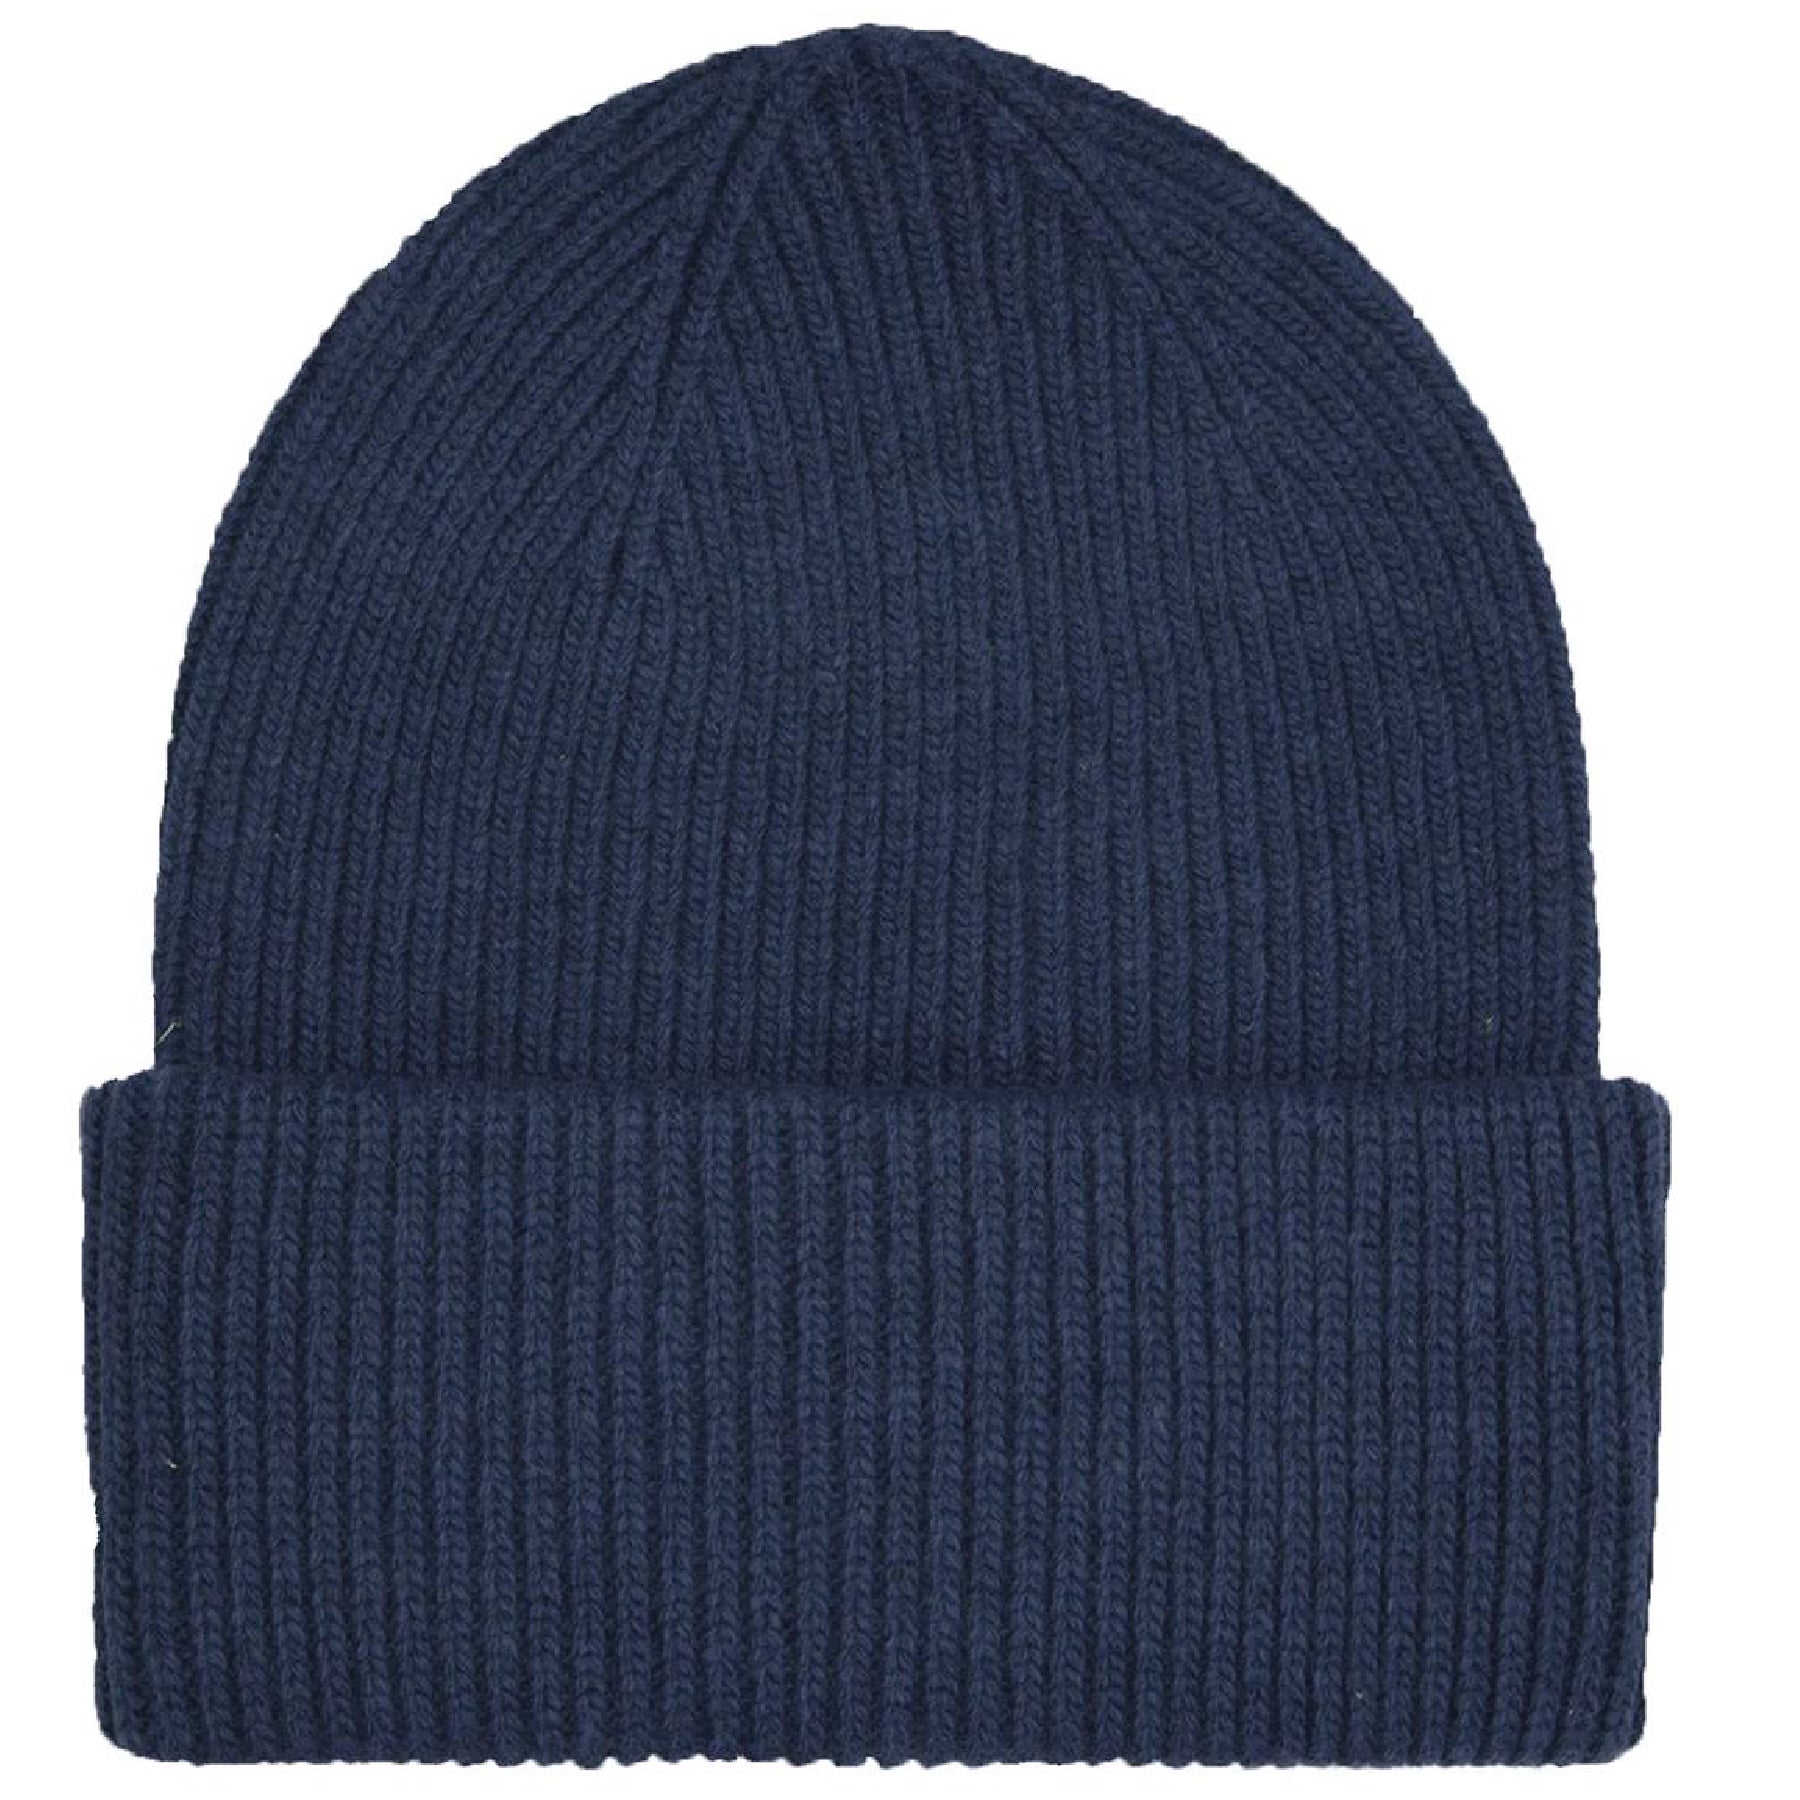 Merino Wool Hat Navy Blue